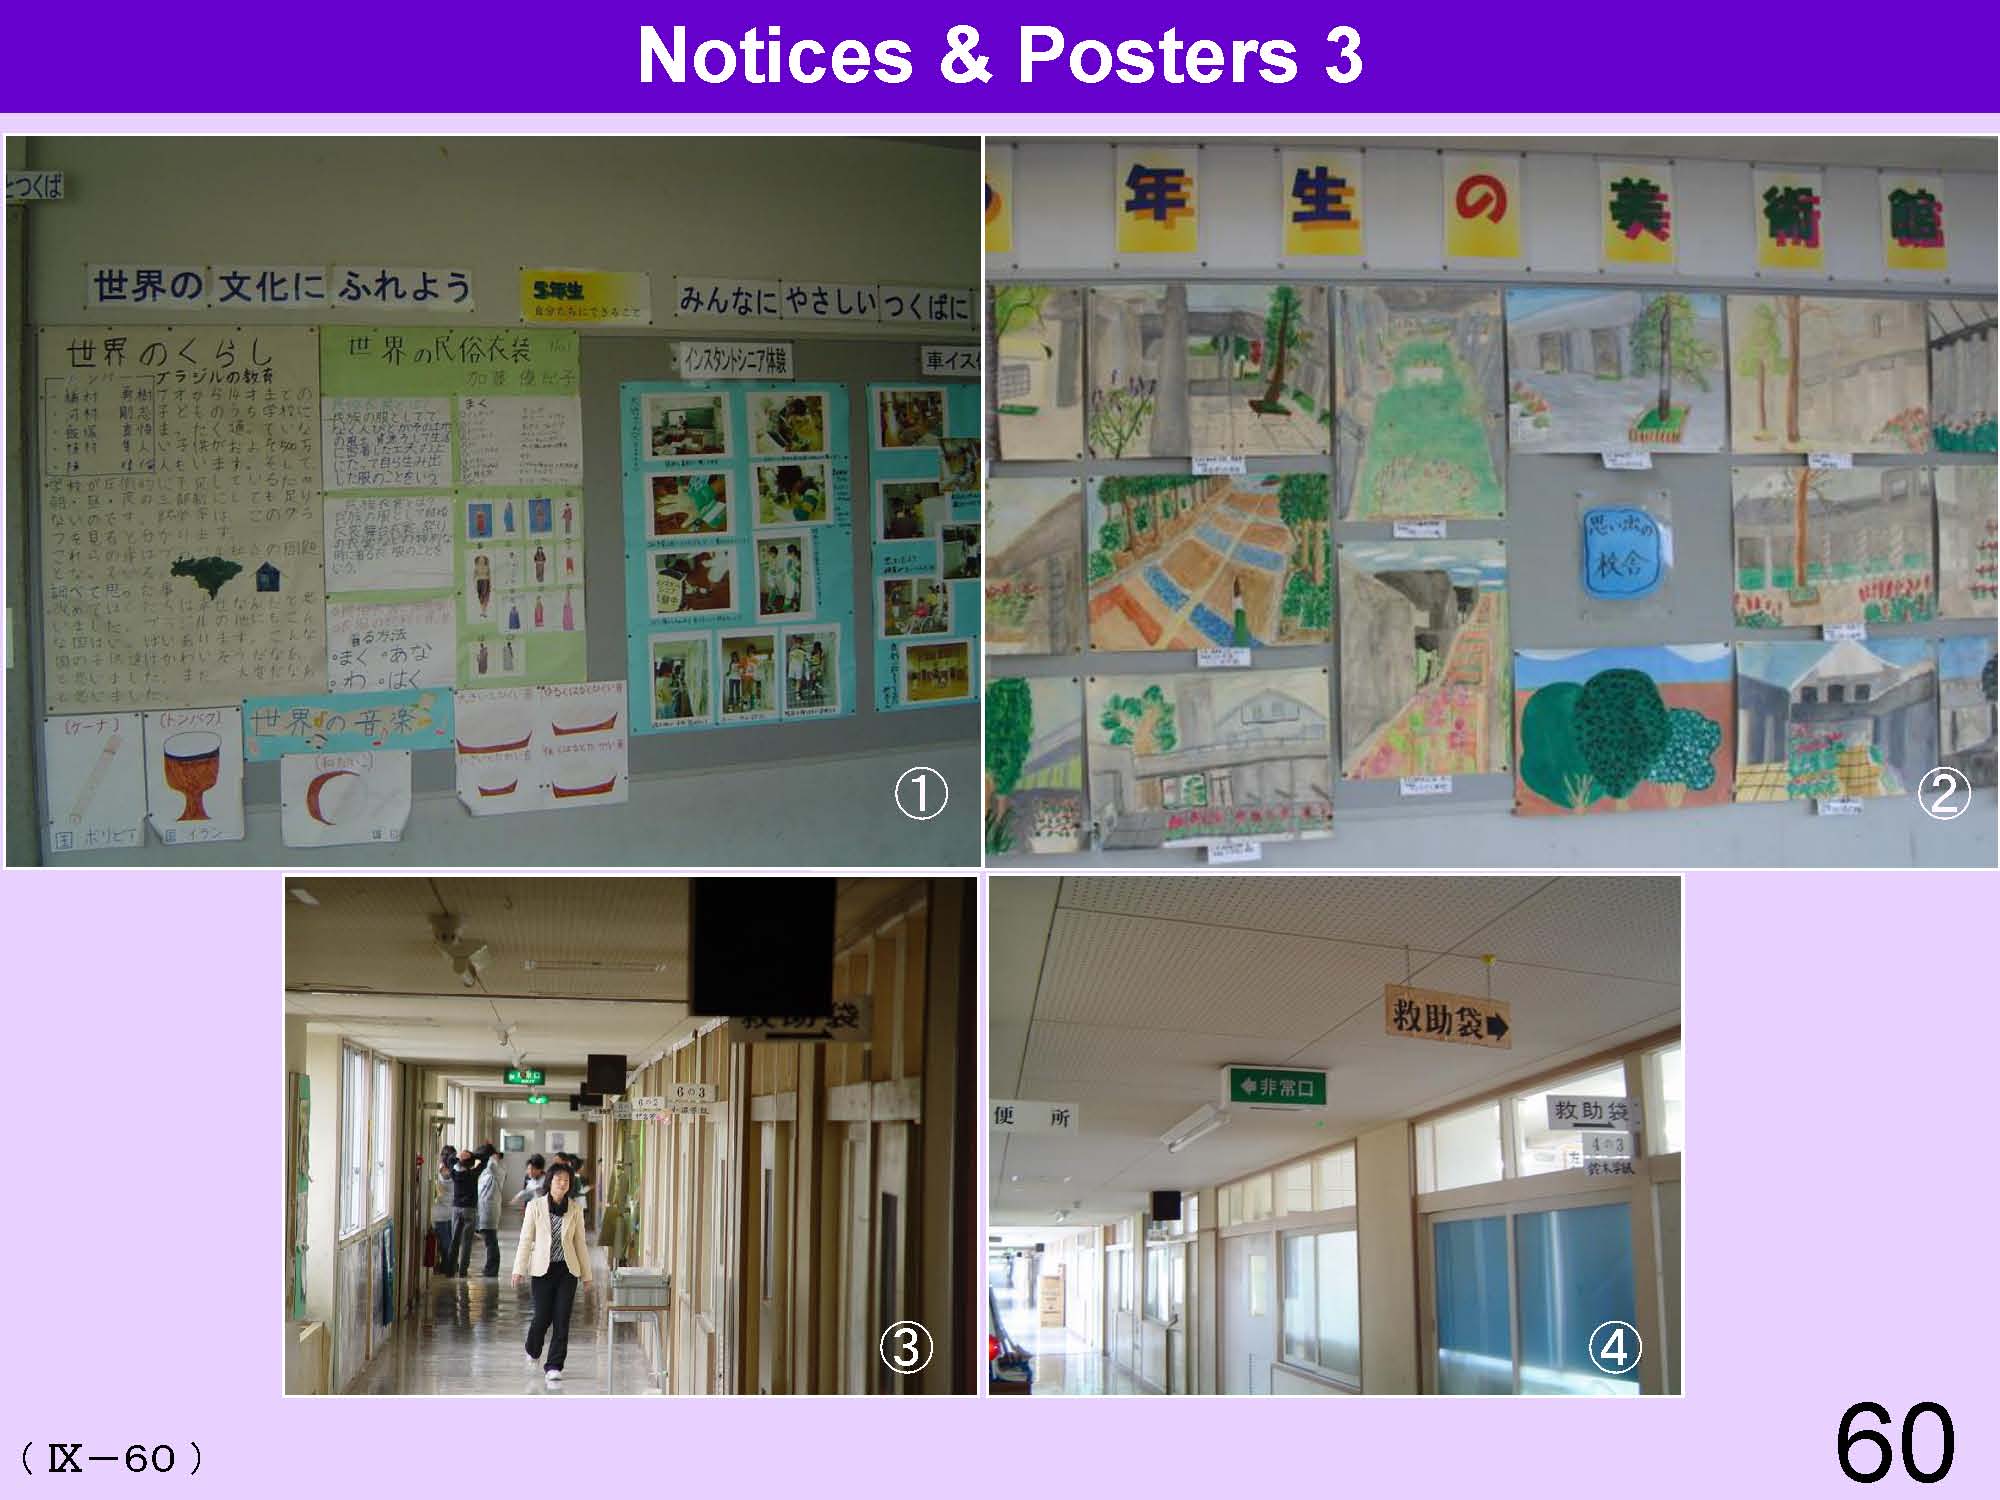 IX Japanese School life and Culture